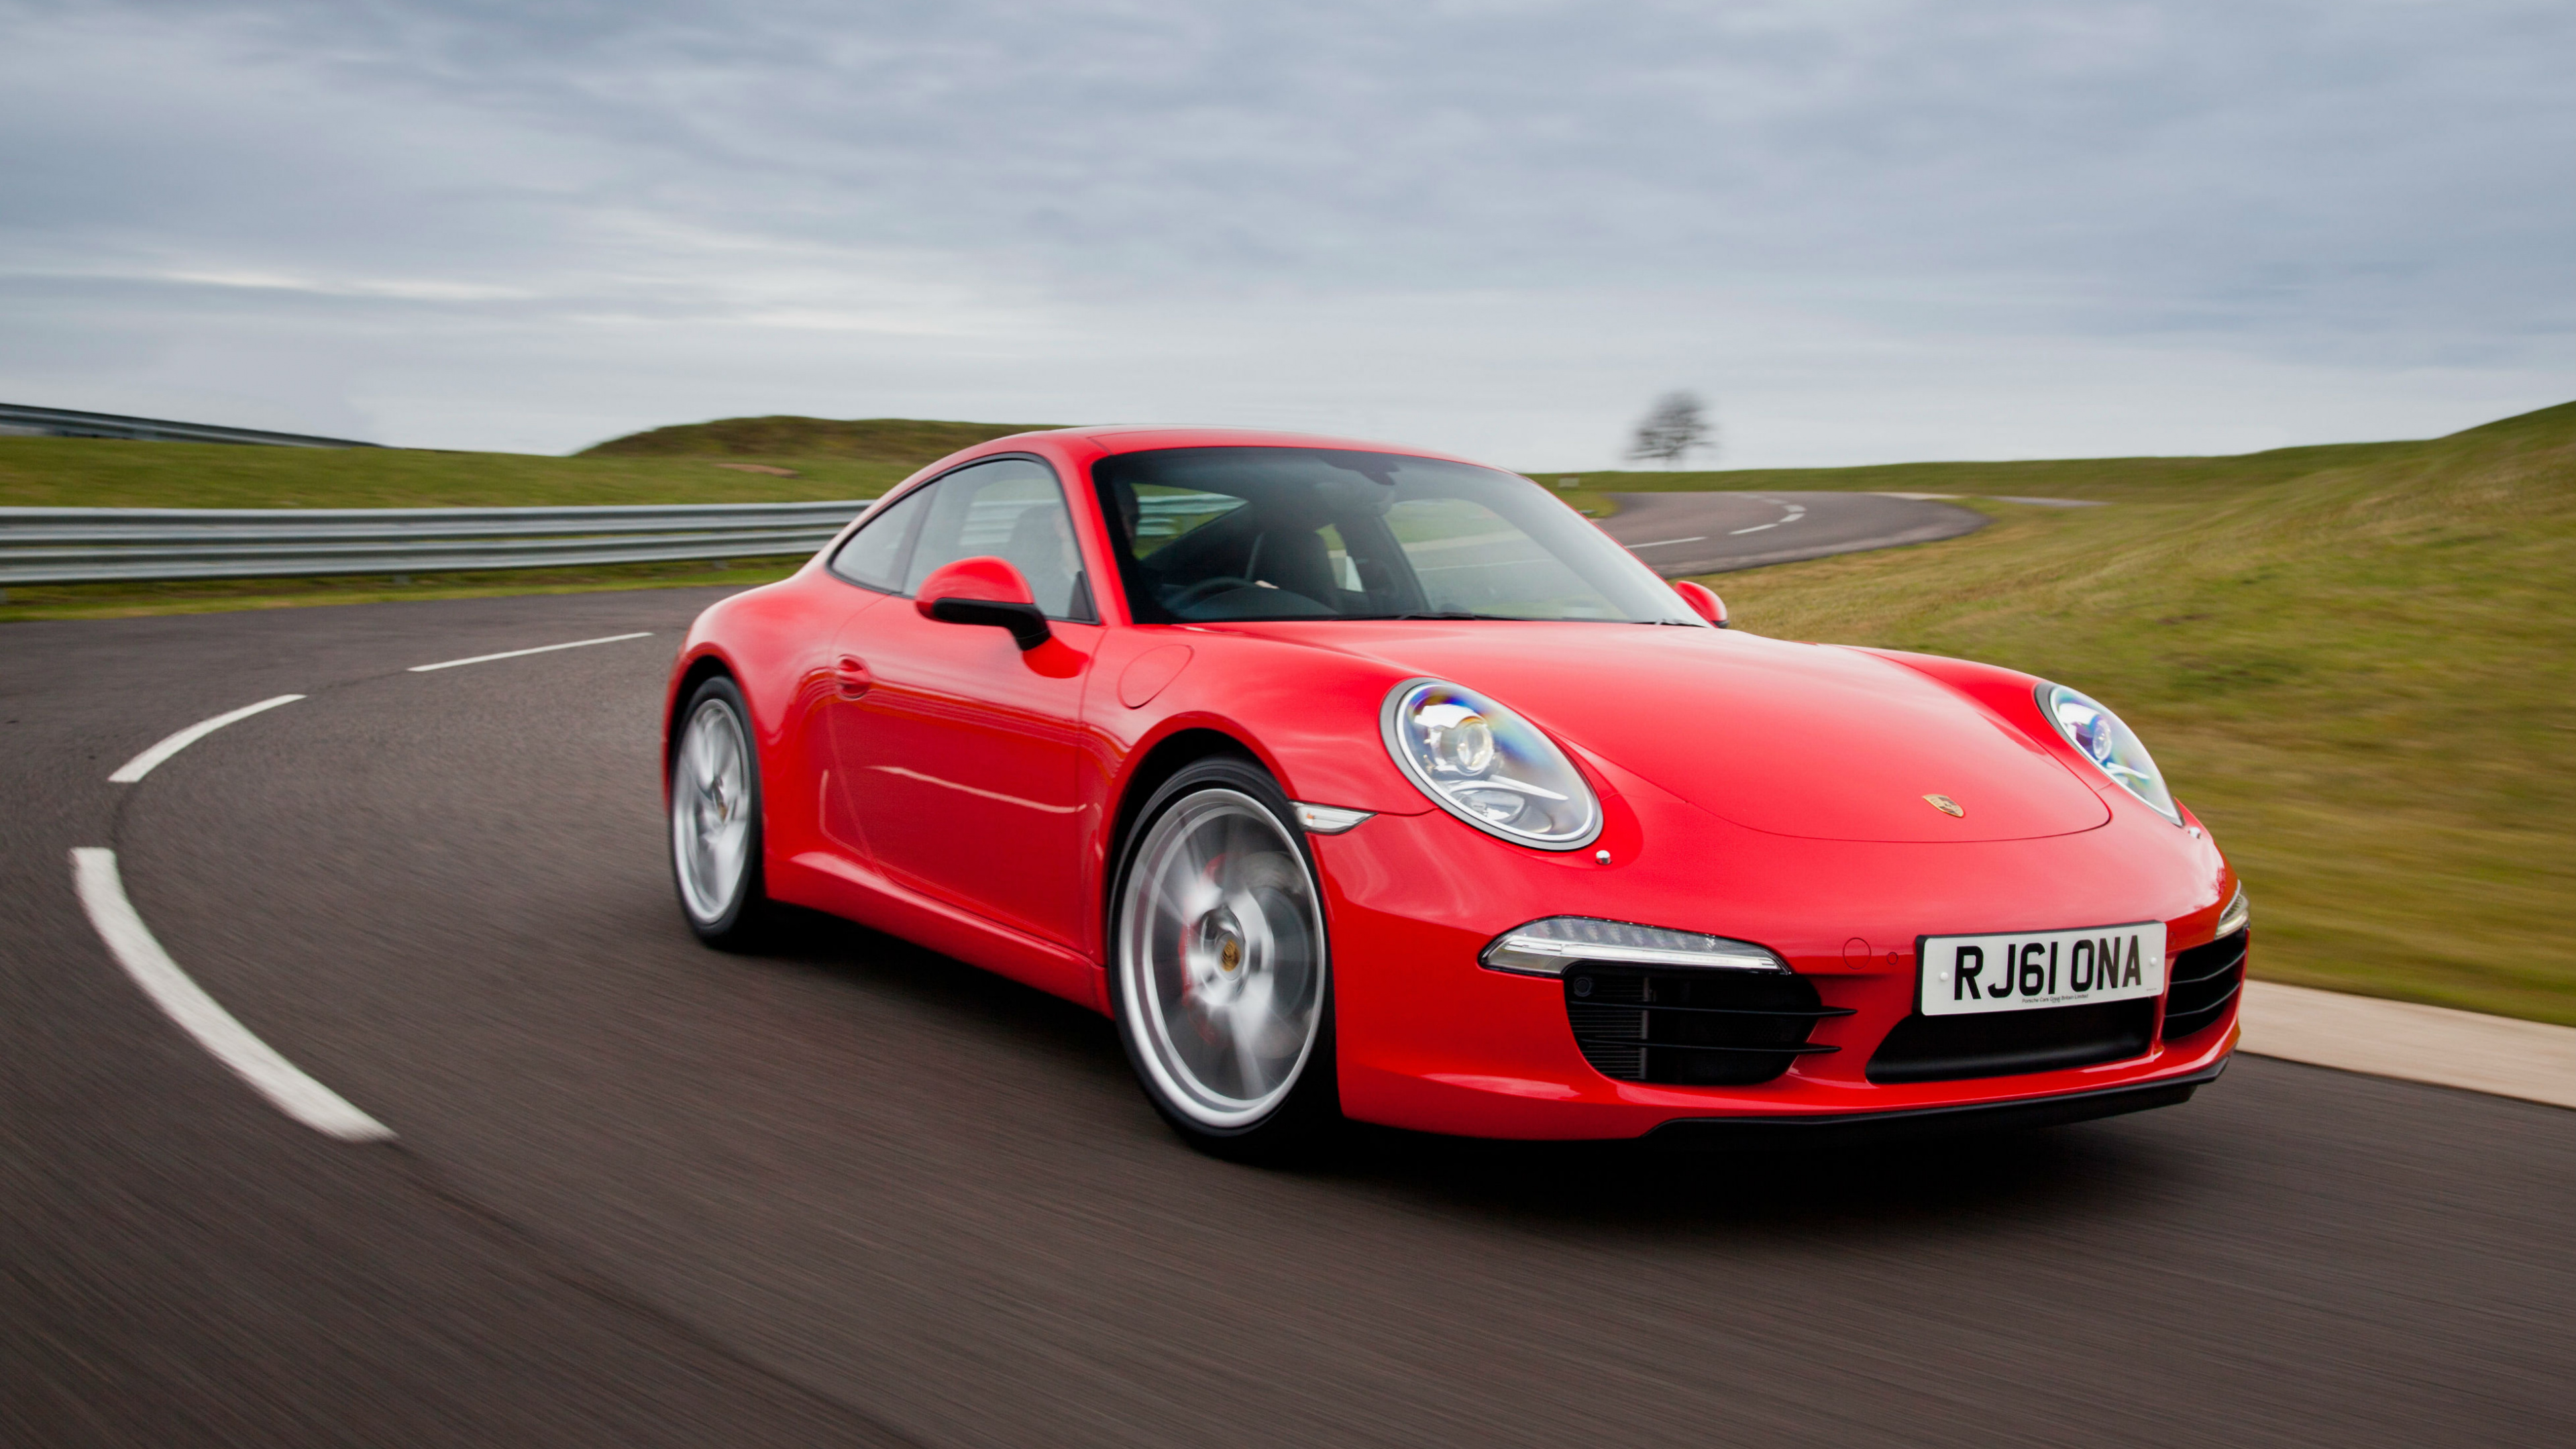 Red Porsche 911 on Road During Daytime. Wallpaper in 3840x2160 Resolution